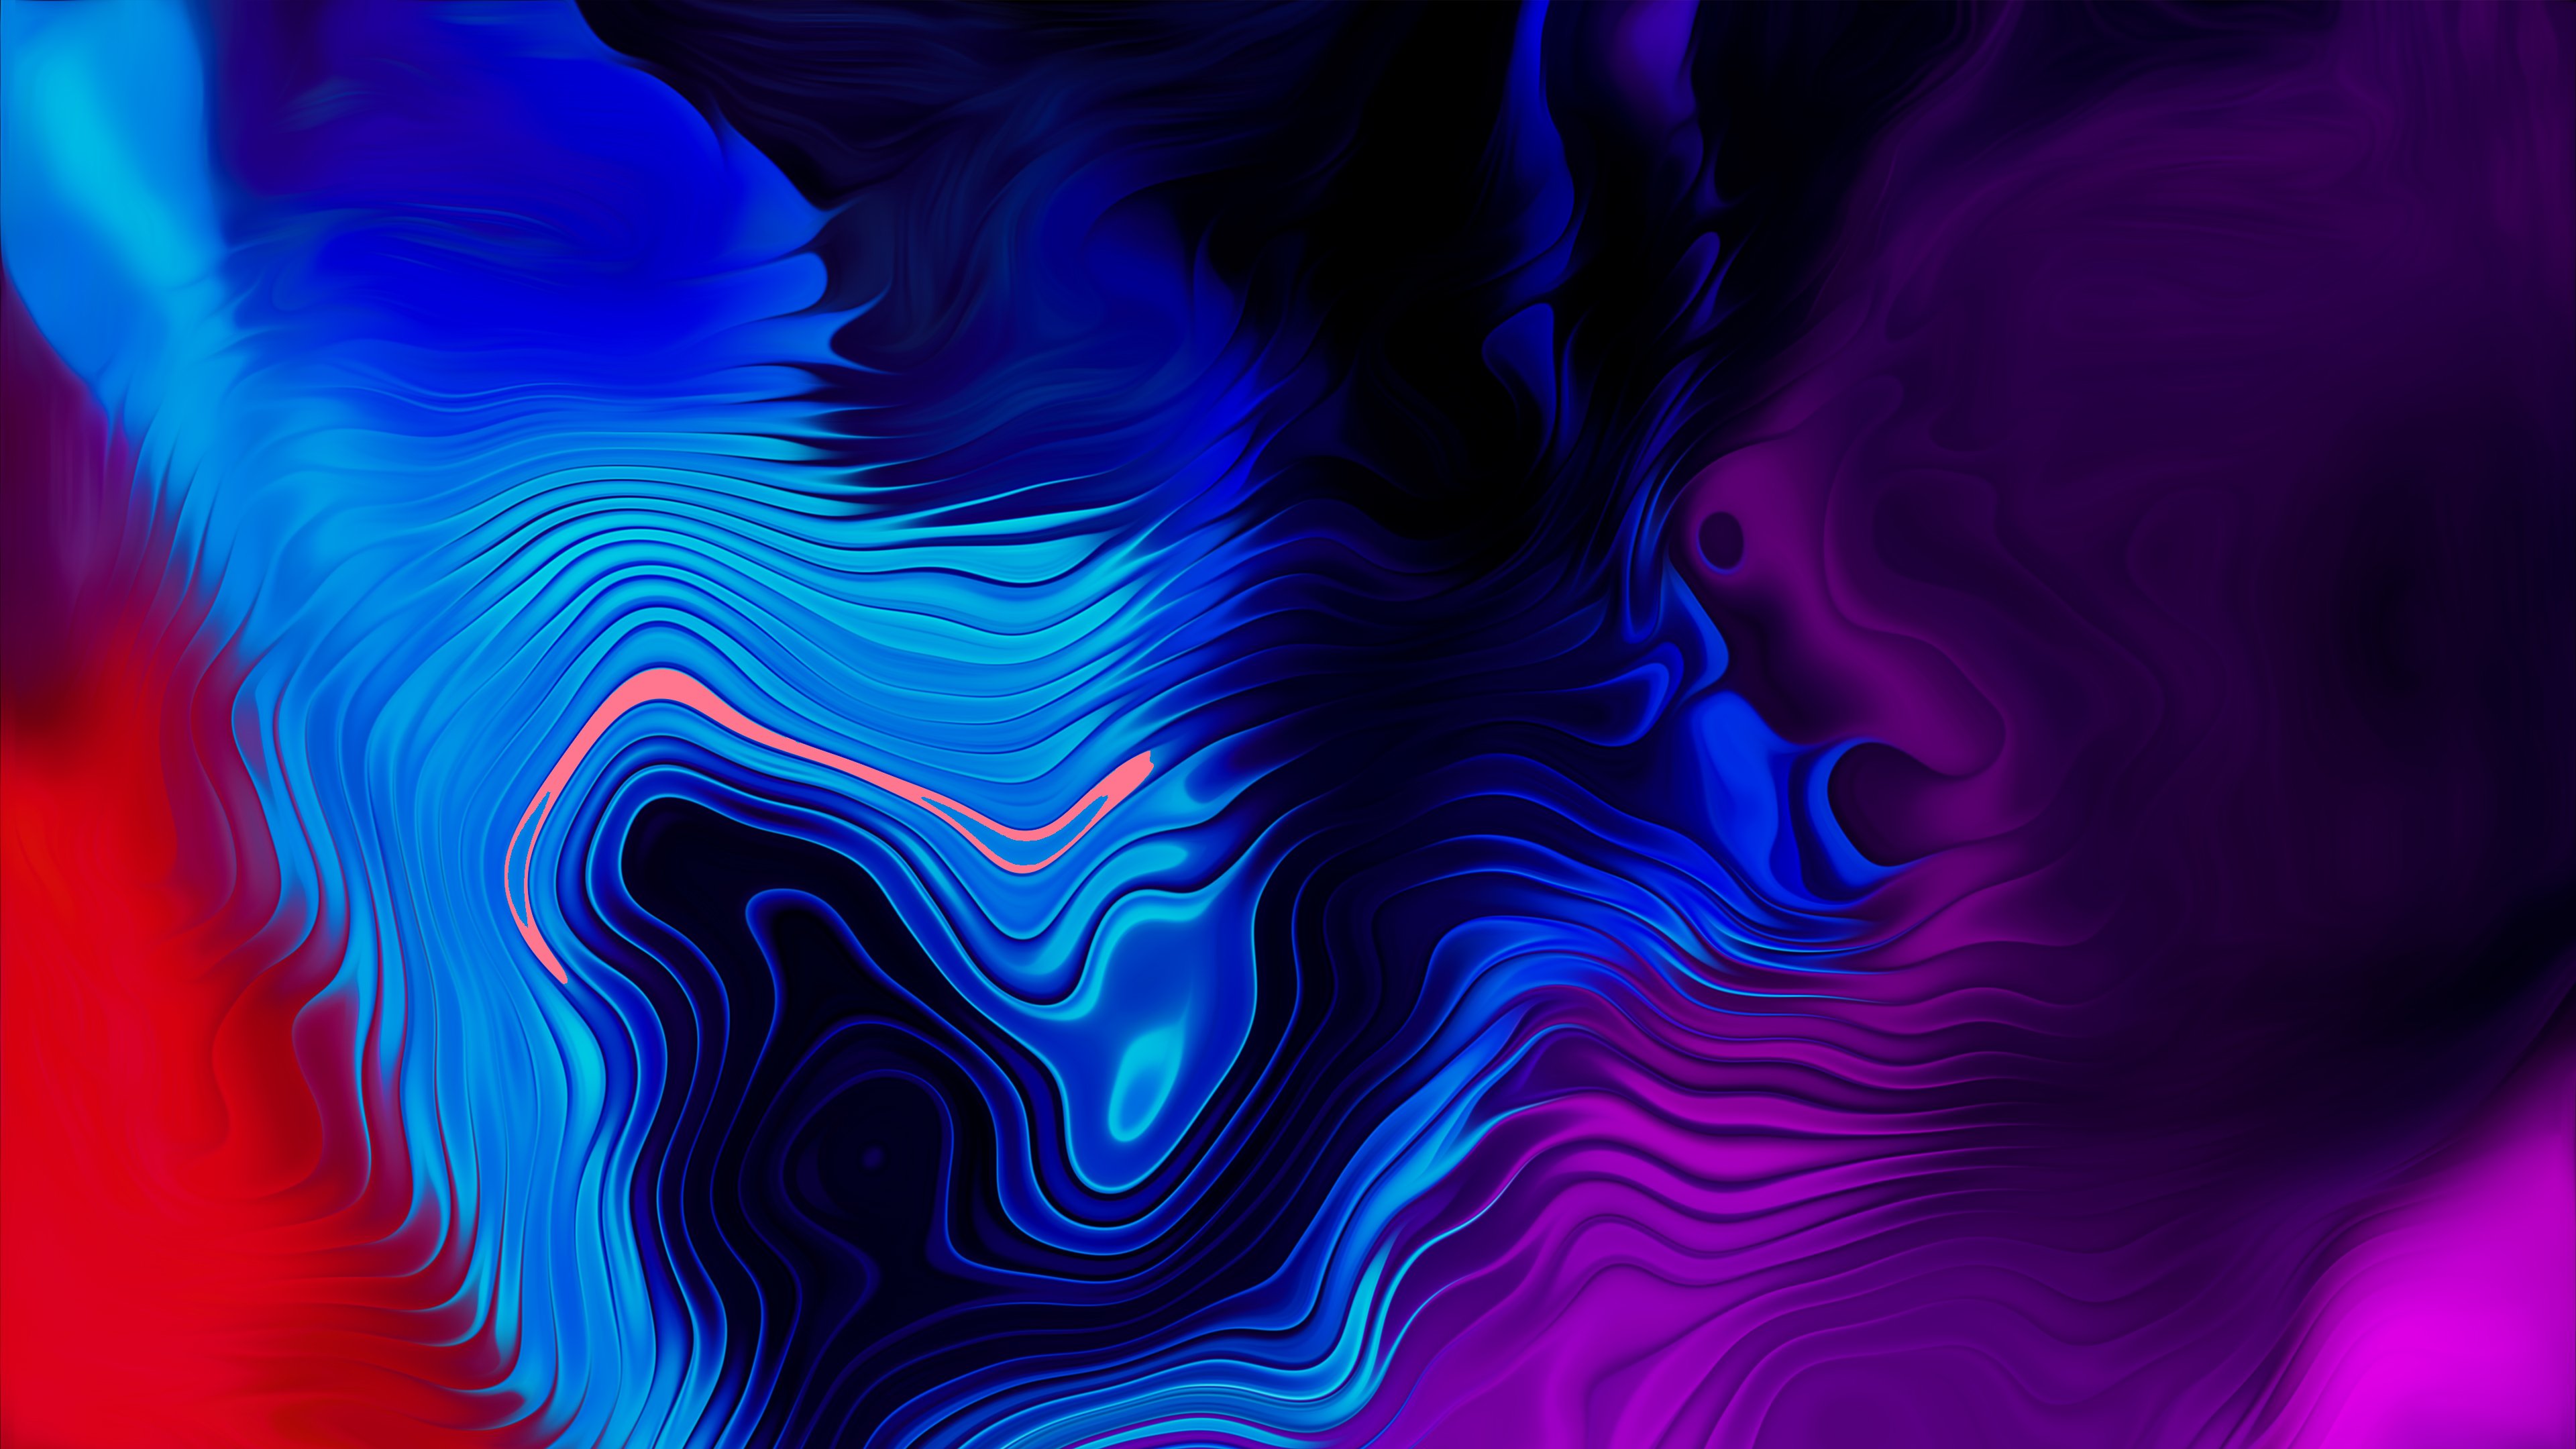 Fondos de pantalla Colores mezclados en ondas